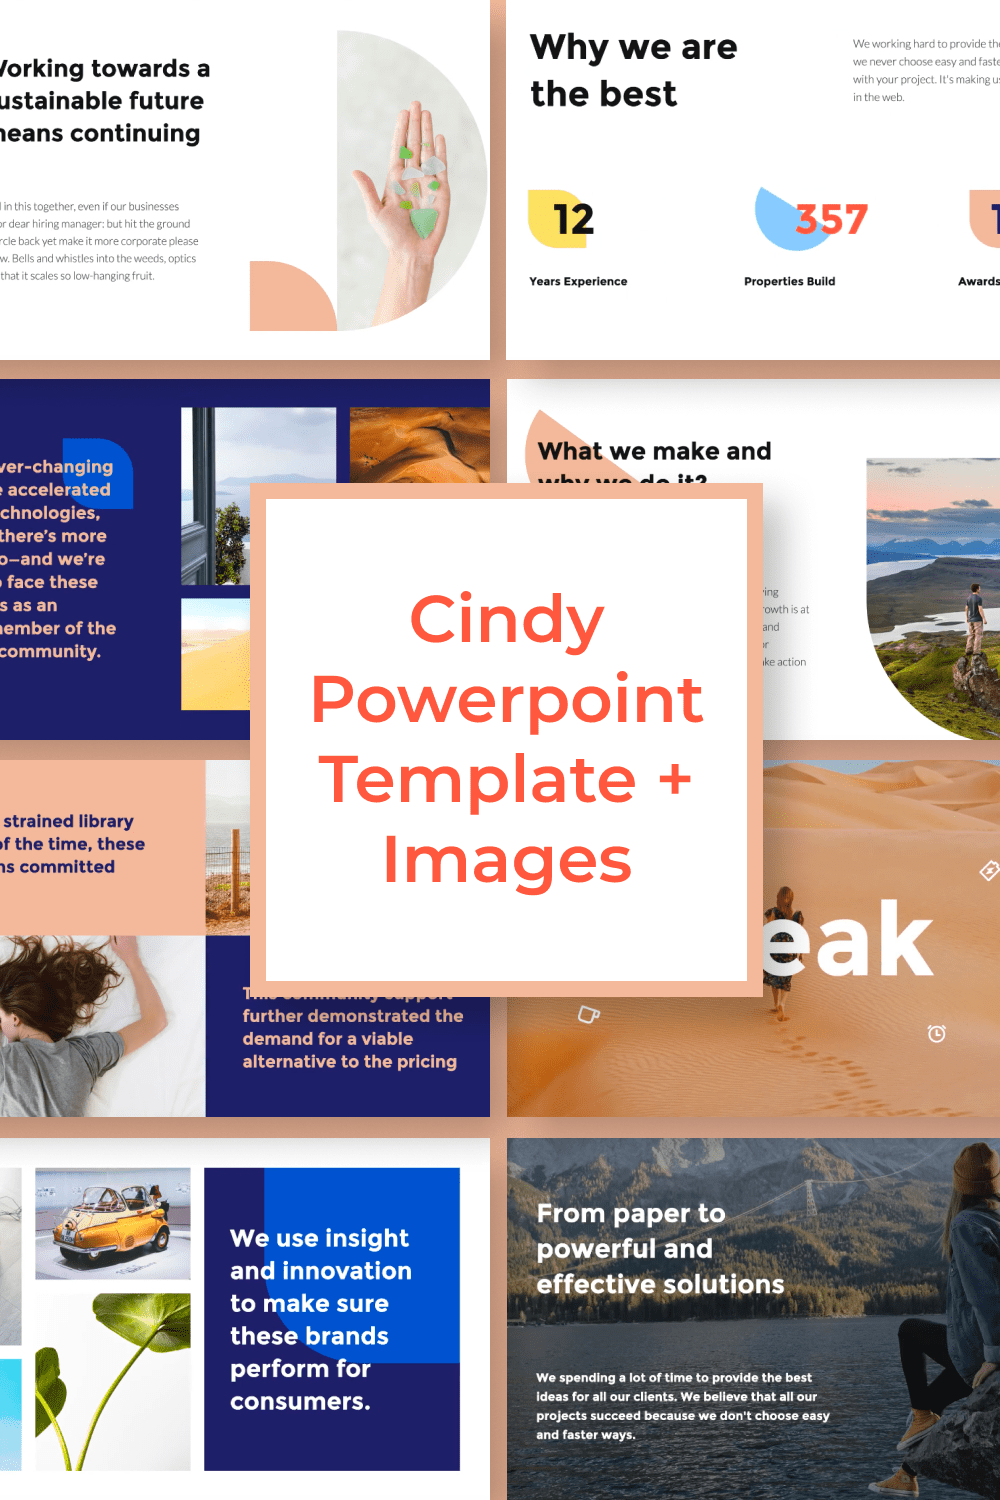 Cindy Powerpoint Template - Pinterest.